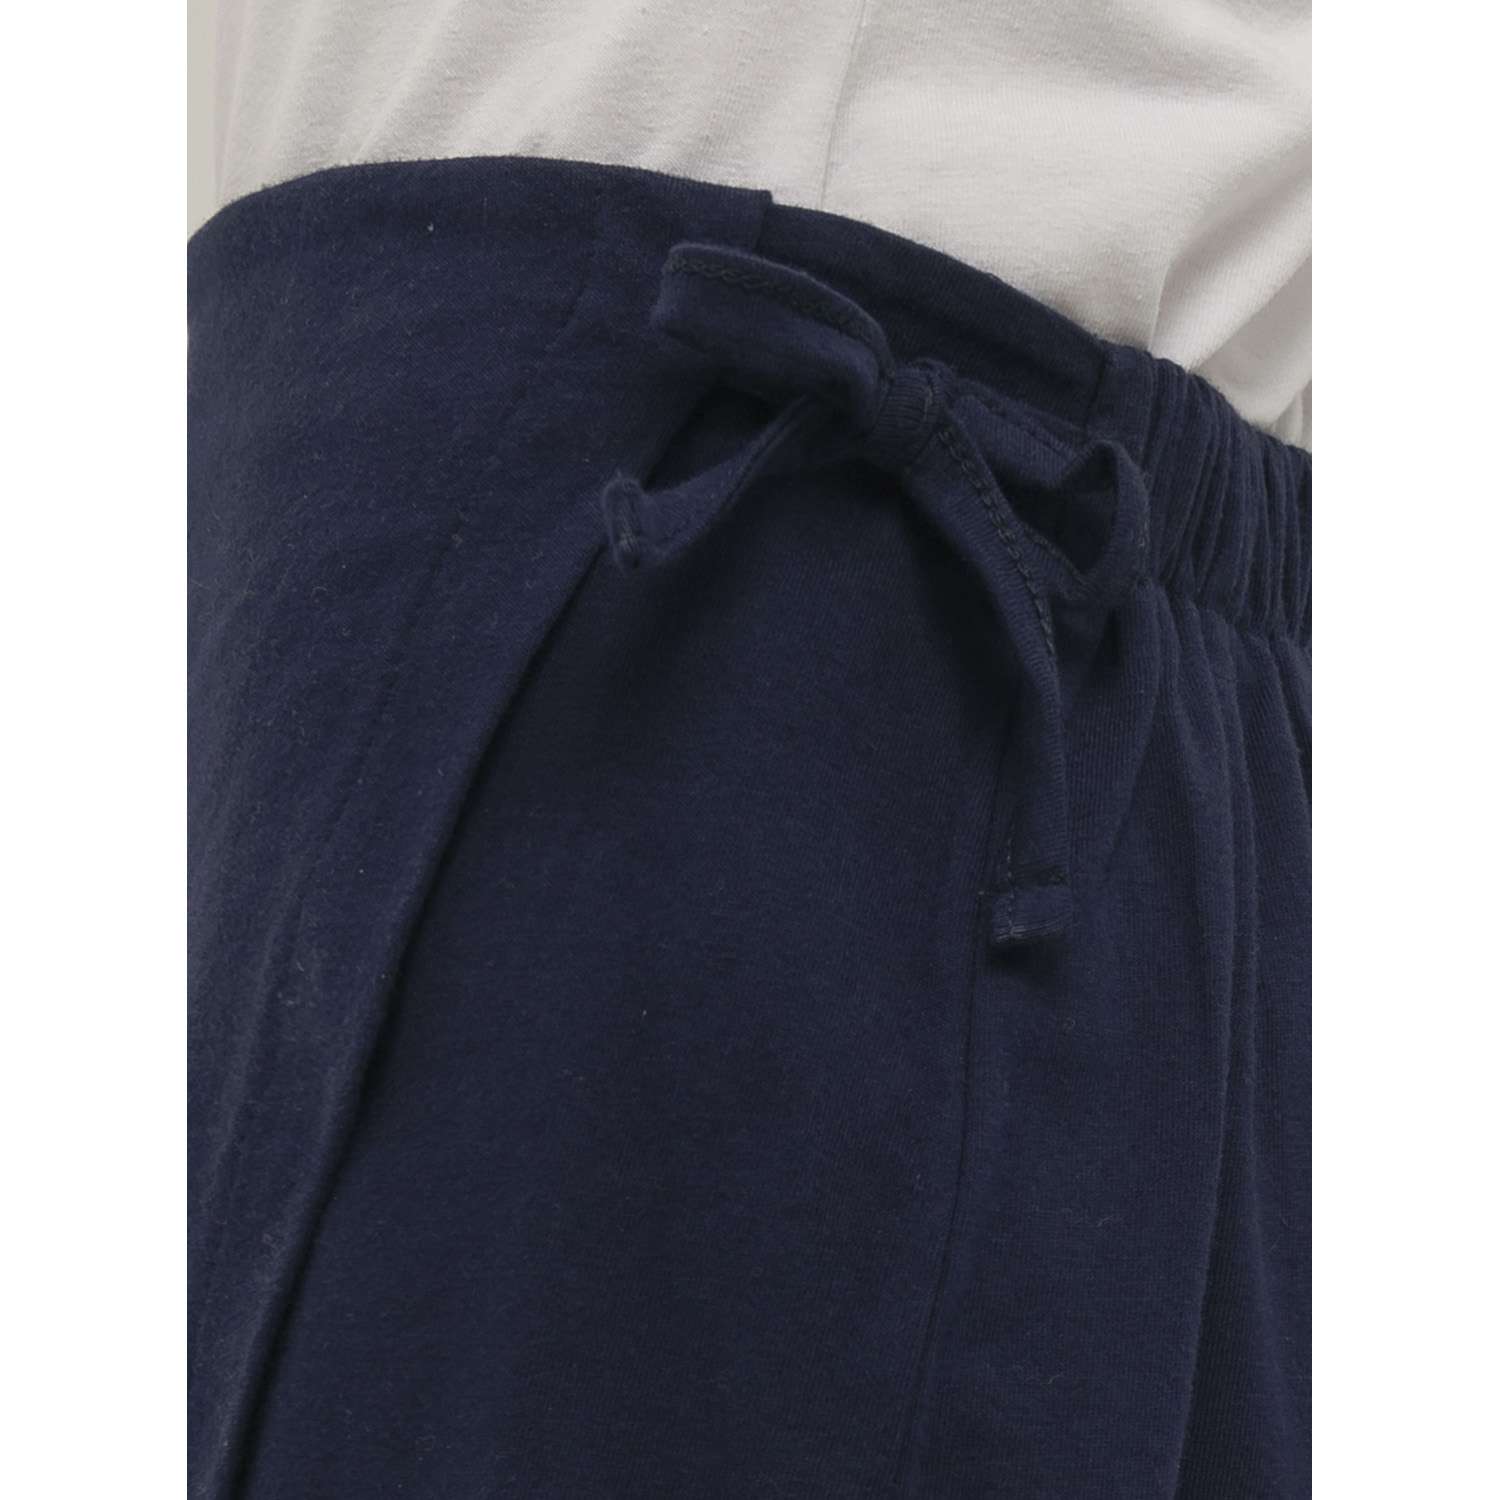 Юбка-шорты PELICAN GFSH4333/Темно-синий(54) - фото 5